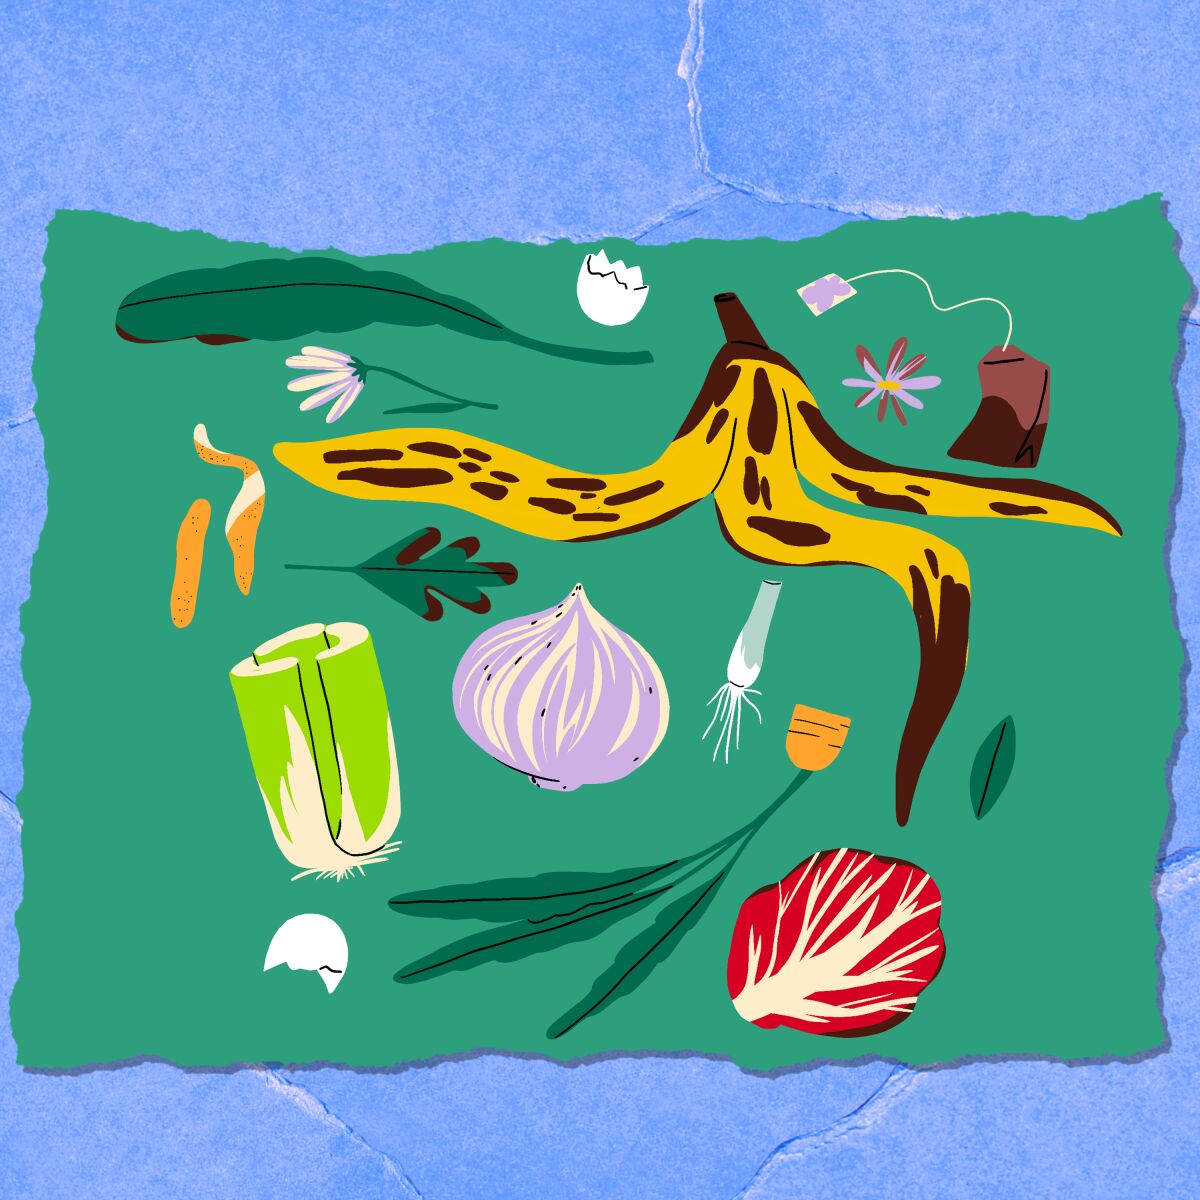 An illustration of a banana peel, eggshell and various food waste.